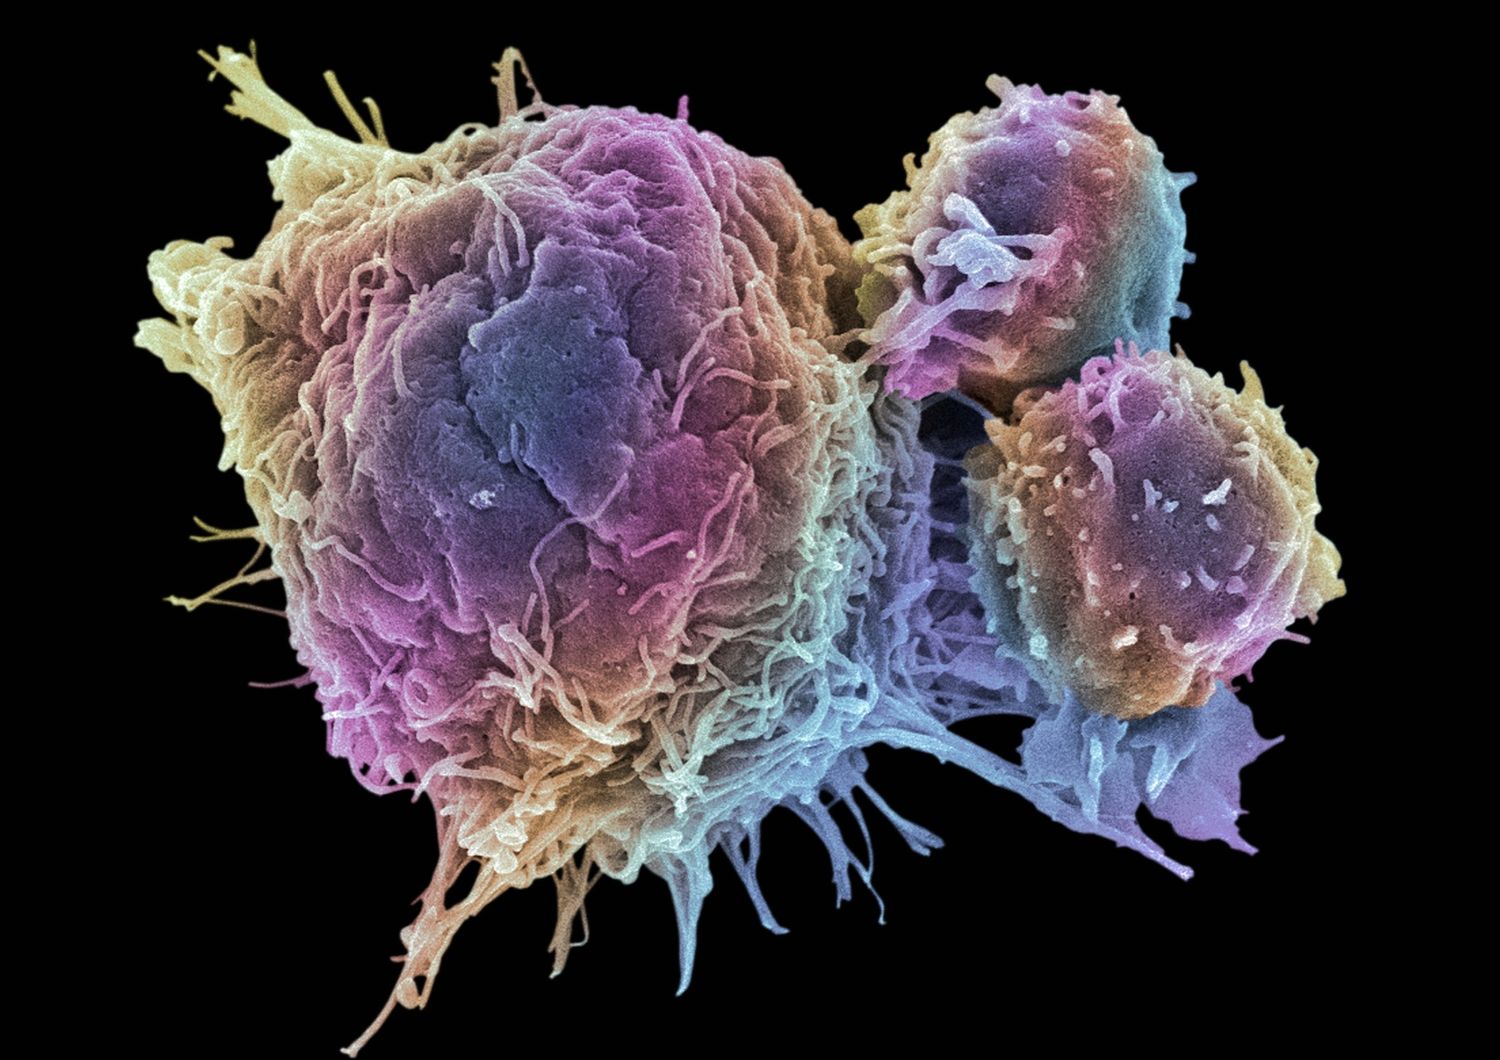 cellule tumorali tumore cancro - afp